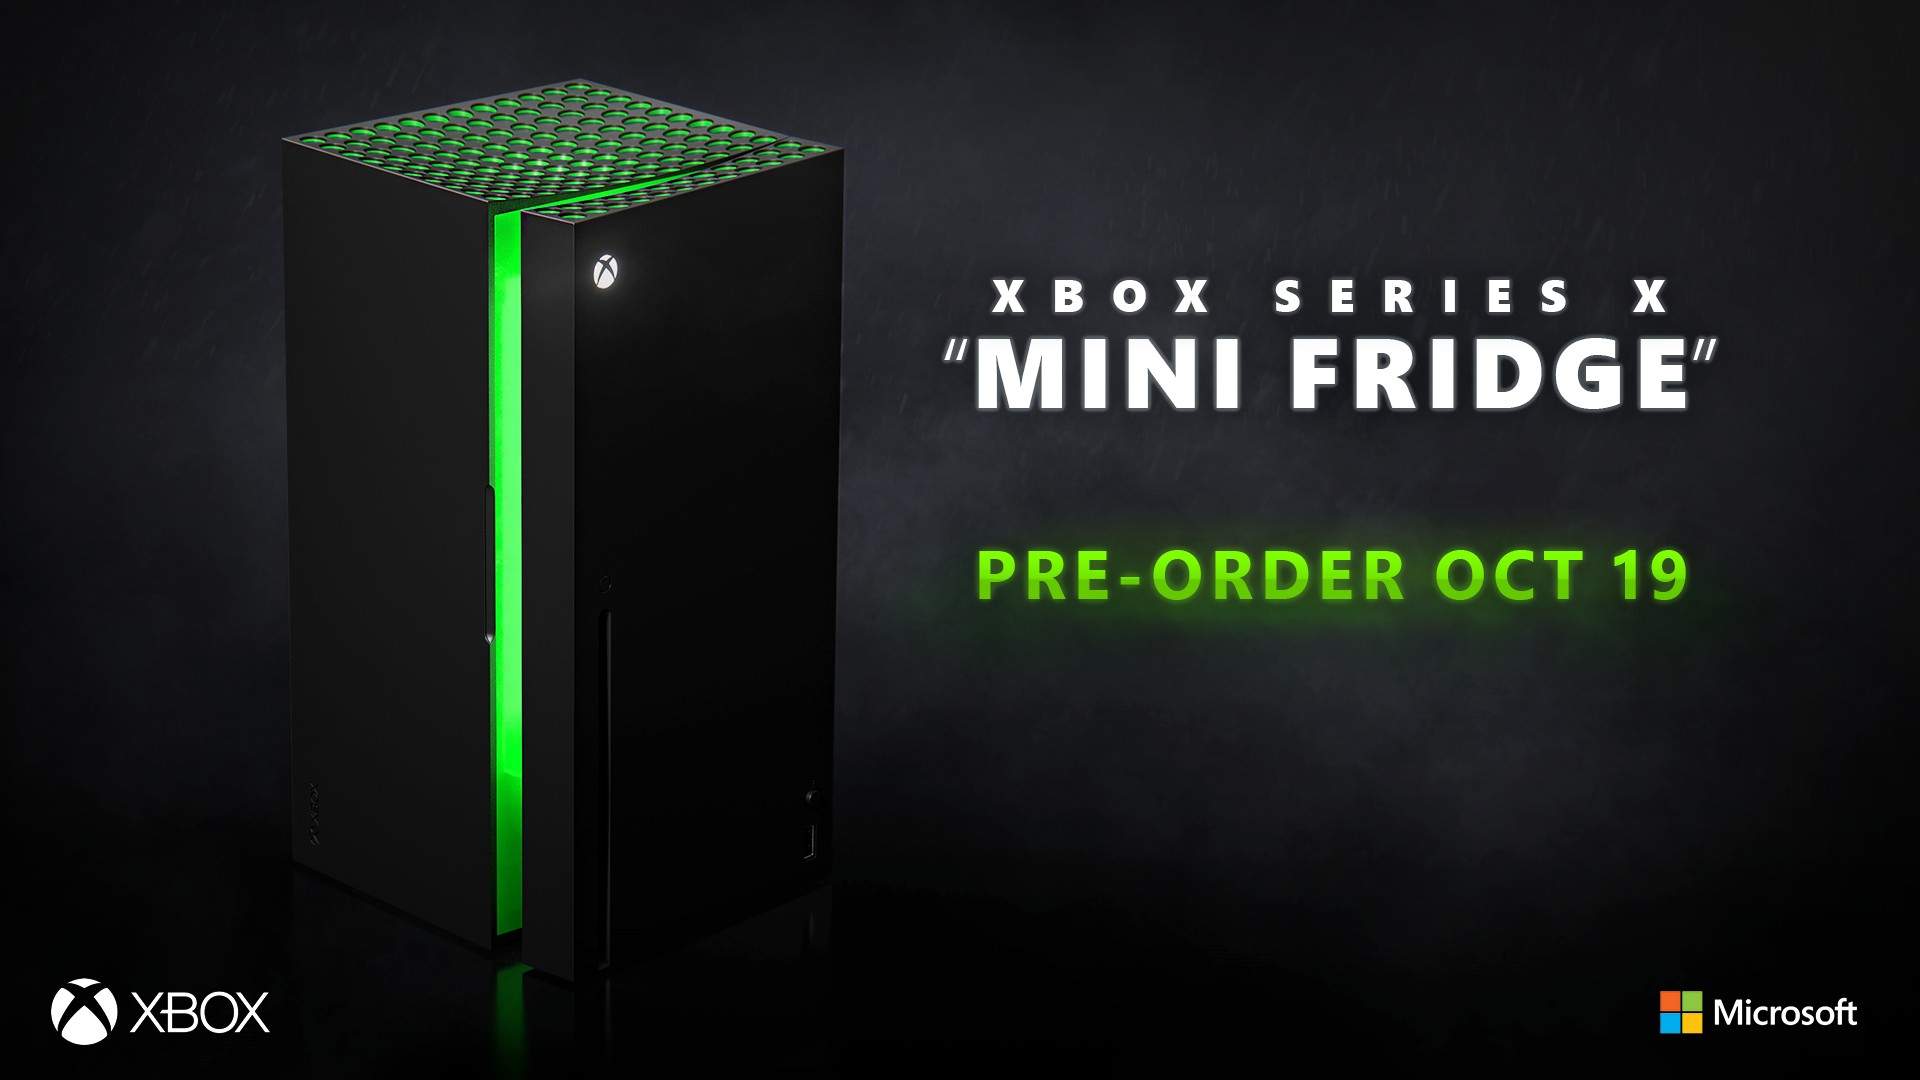 HHW Gaming: Microsoft’s Xbox Series X “Mini Fridge” Sells Out, Gamers React On Twitter